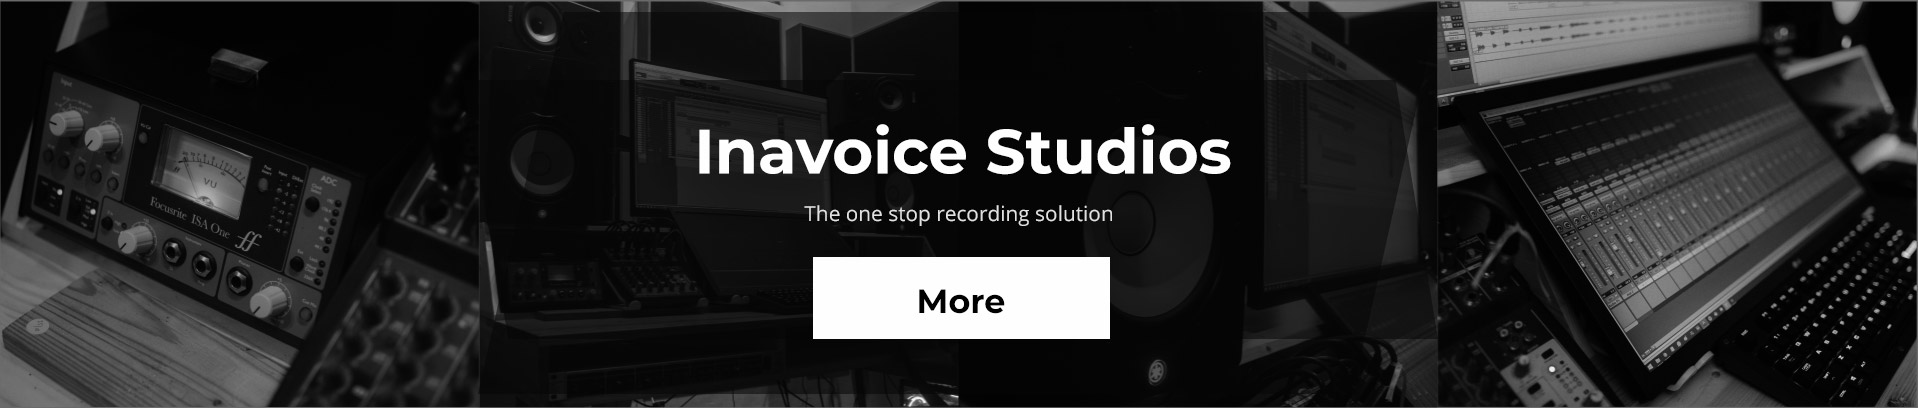 Inavoice.com Studio Specification